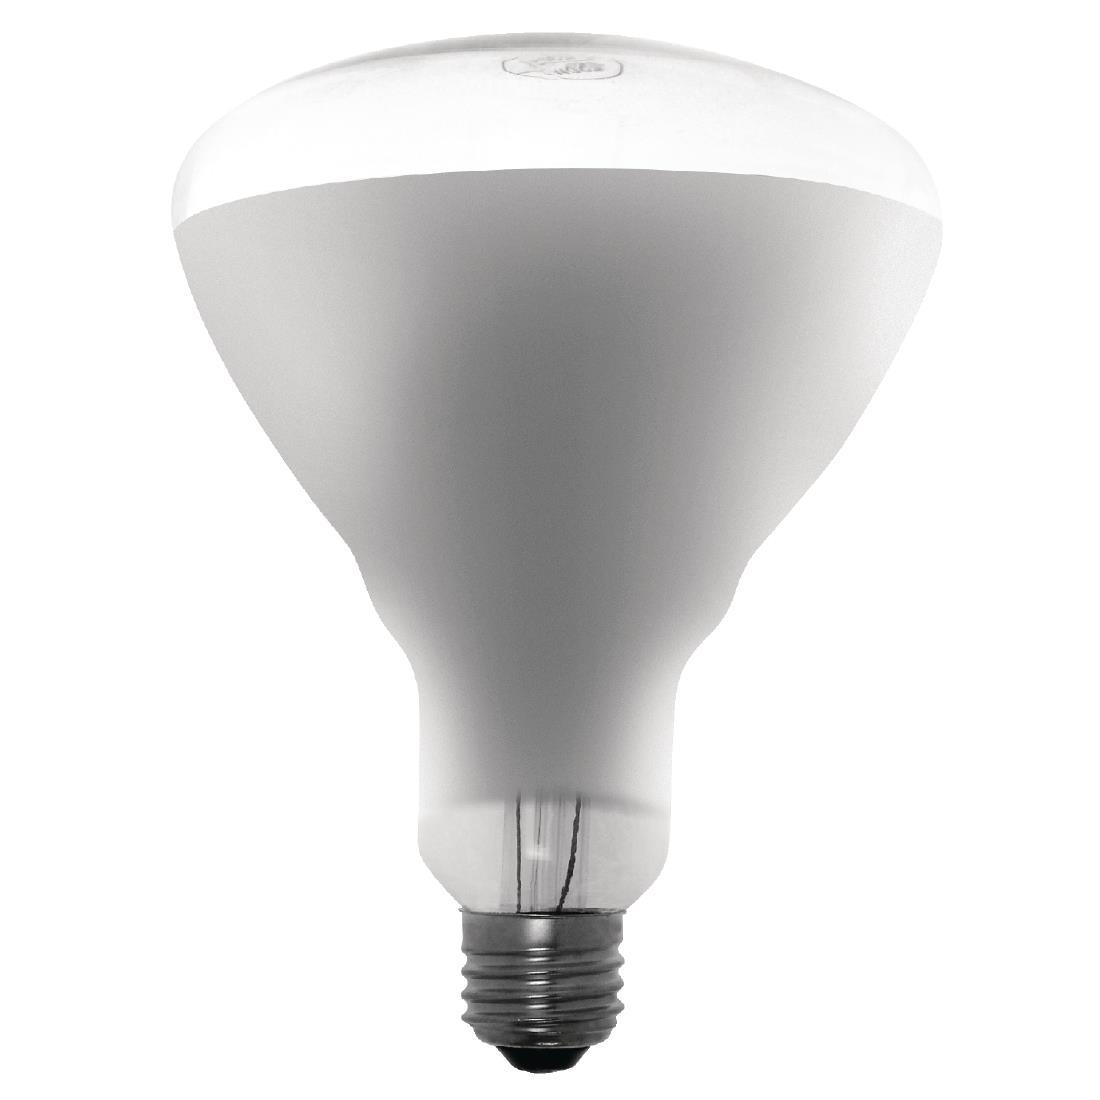 Buffalo 250W Shatterproof Infrared Heat Lamp ES - AE307  - 1